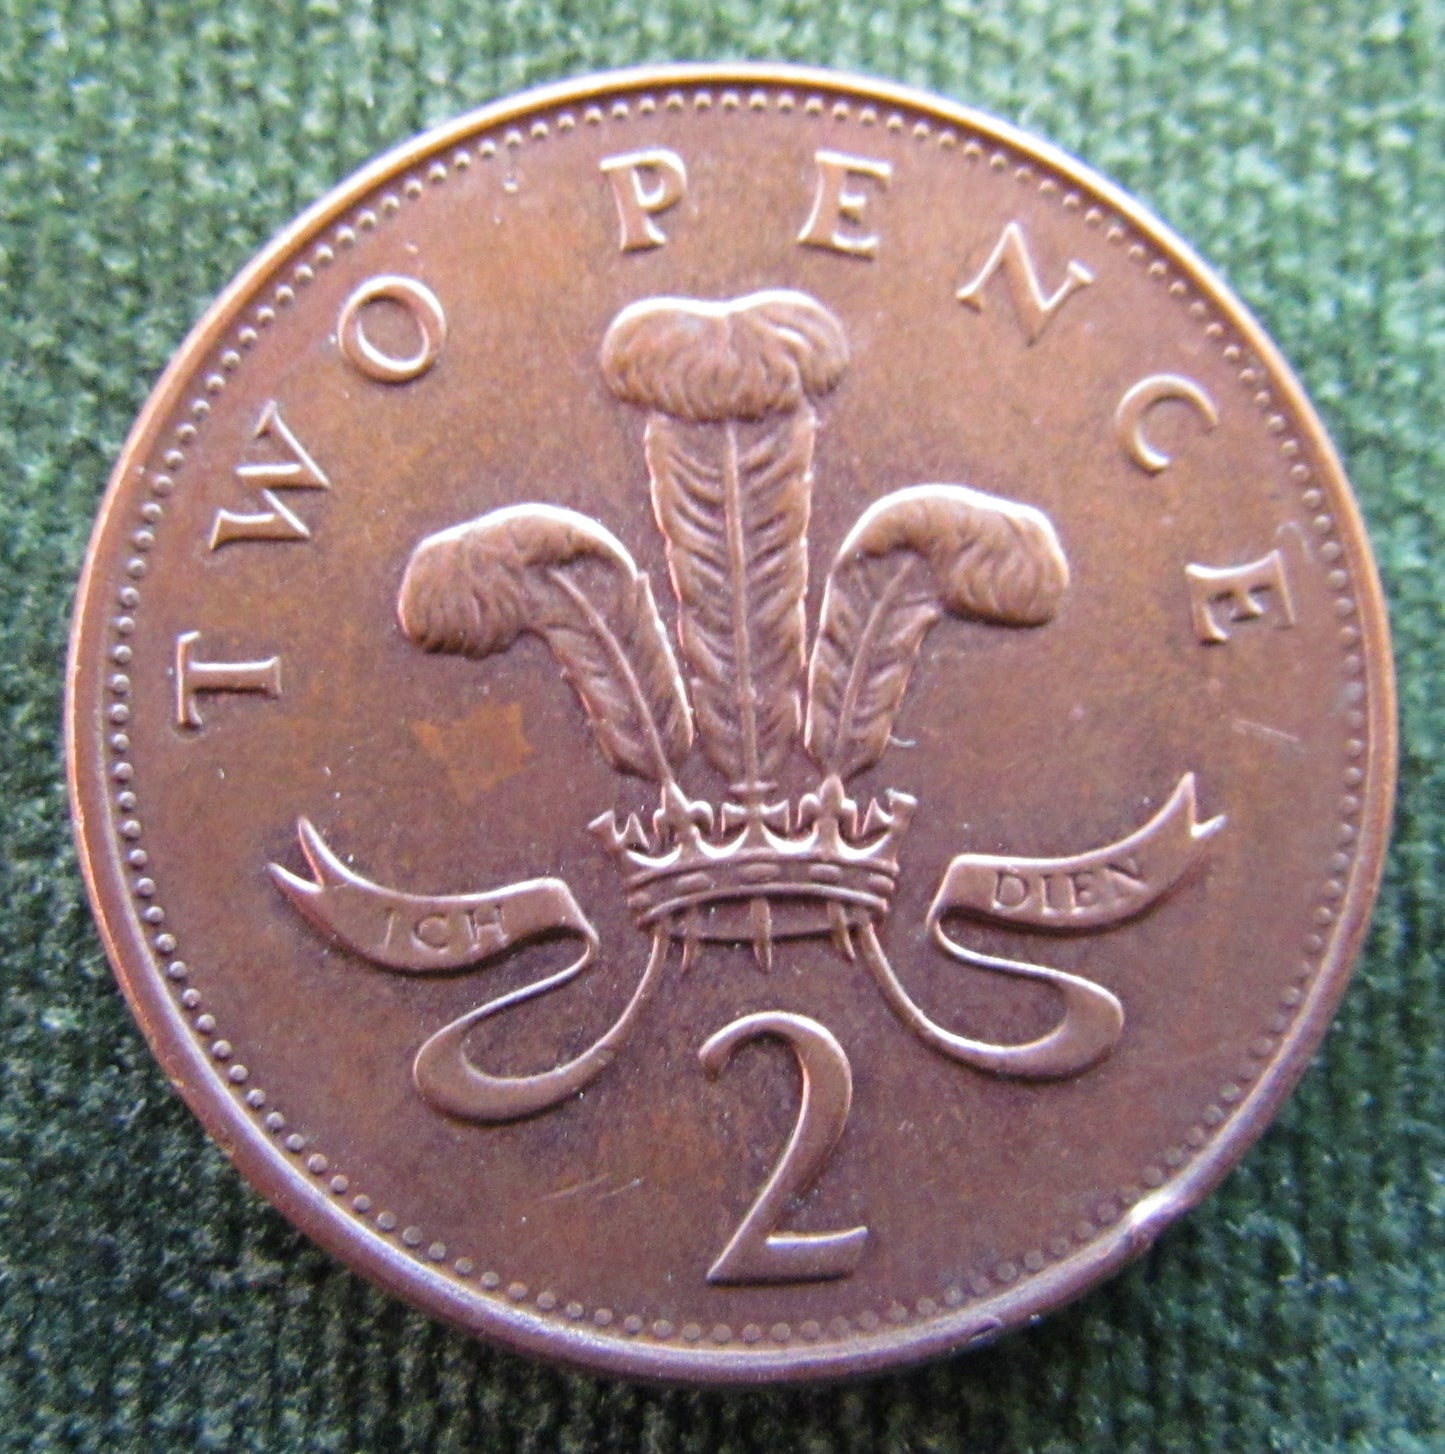 GB British UK English 1993 2 New Pence Queen Elizabeth II Coin